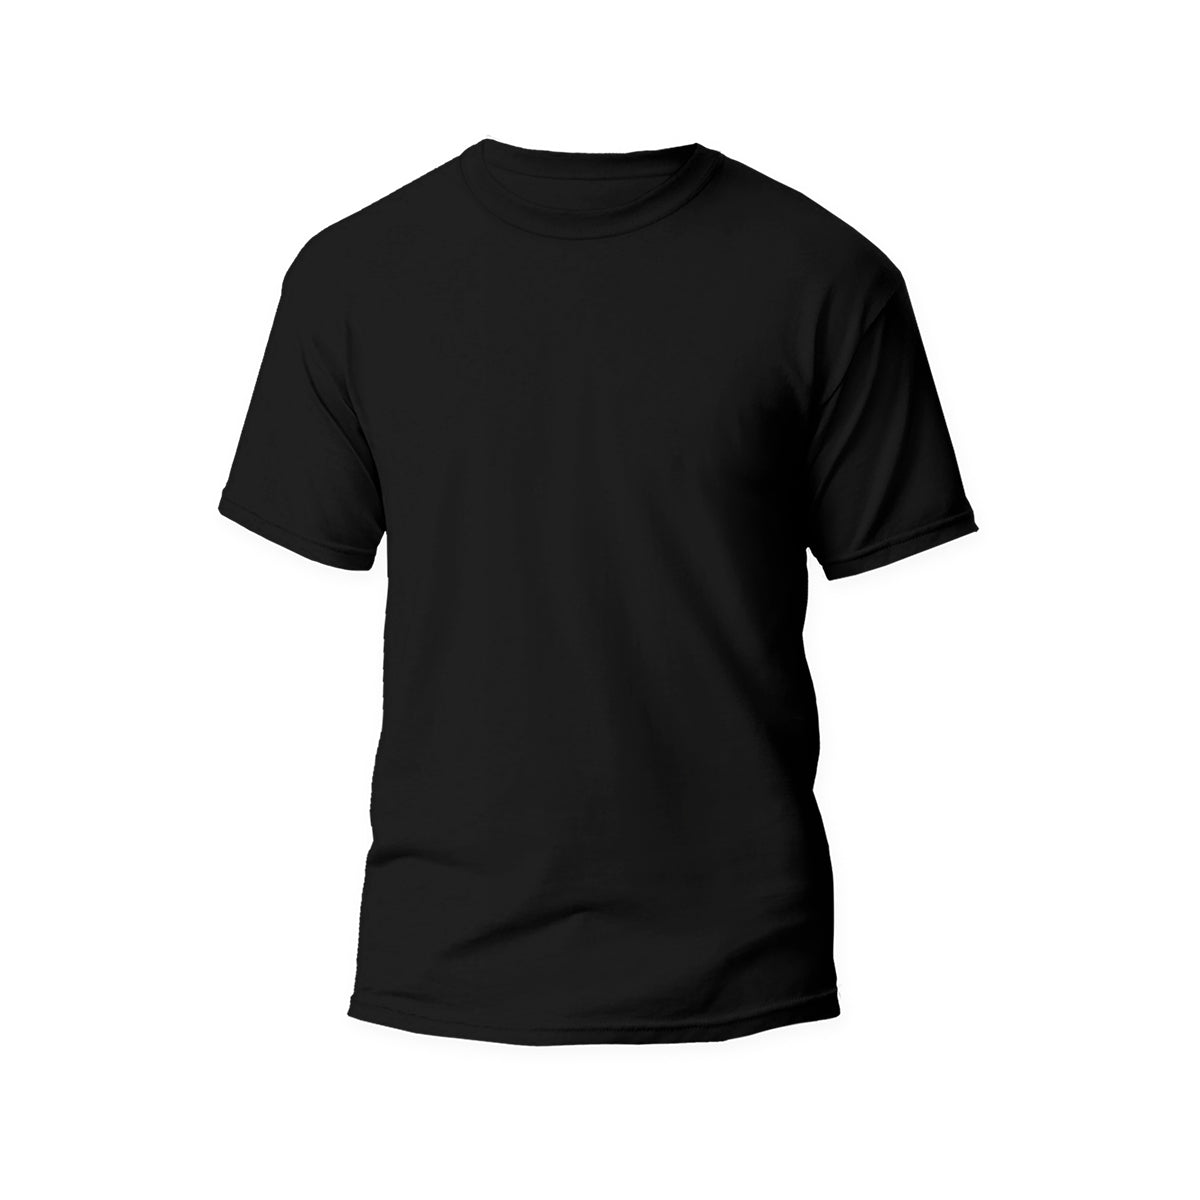 HercShirt 3.0 Max - The World's Cleanest Short Sleeve Shirt